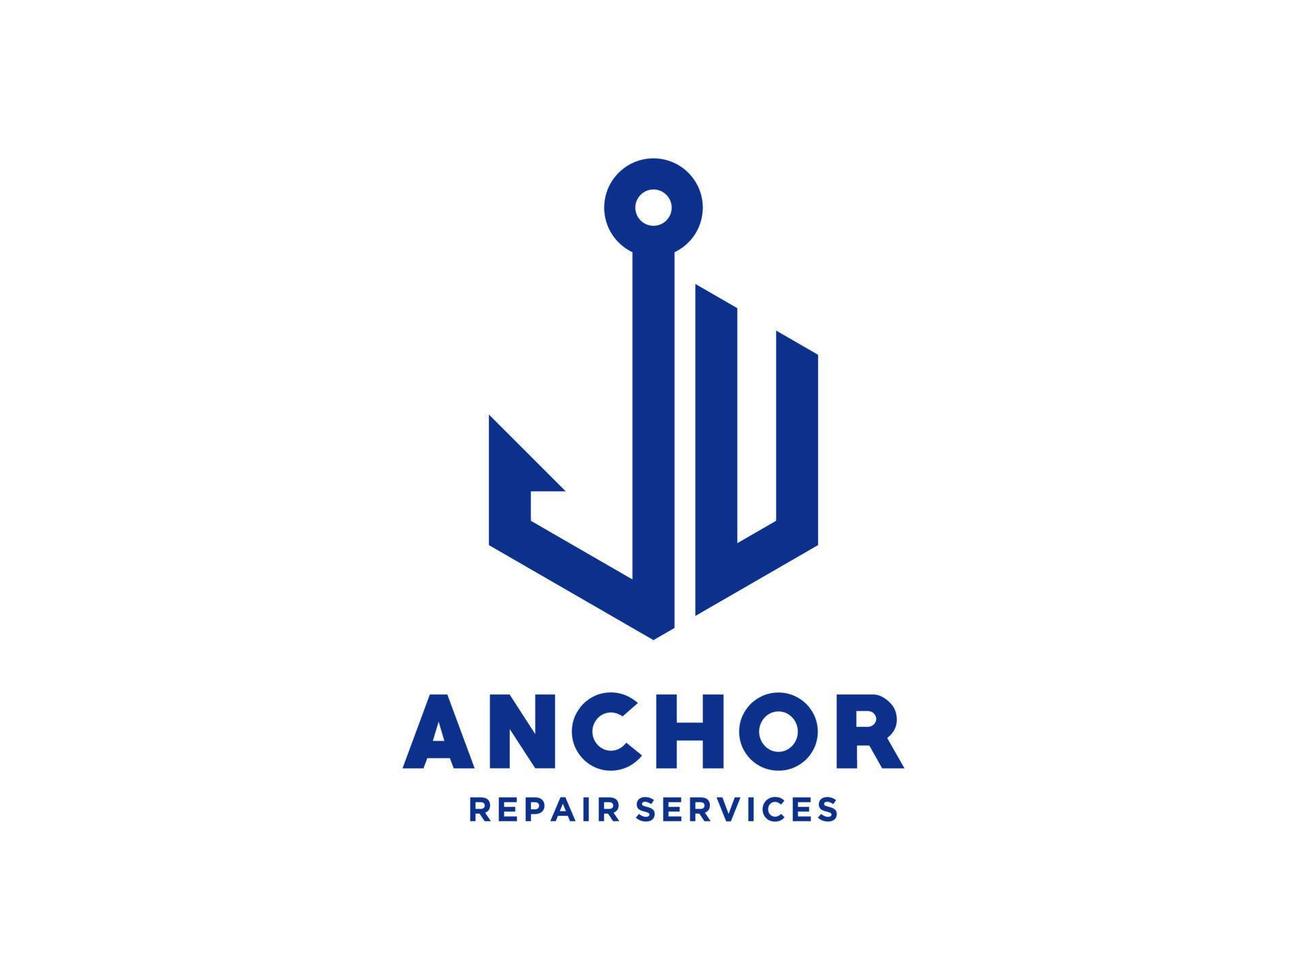 diseño de logotipo u ancla alfabeto artístico para barco barco marina transporte náutico vector libre